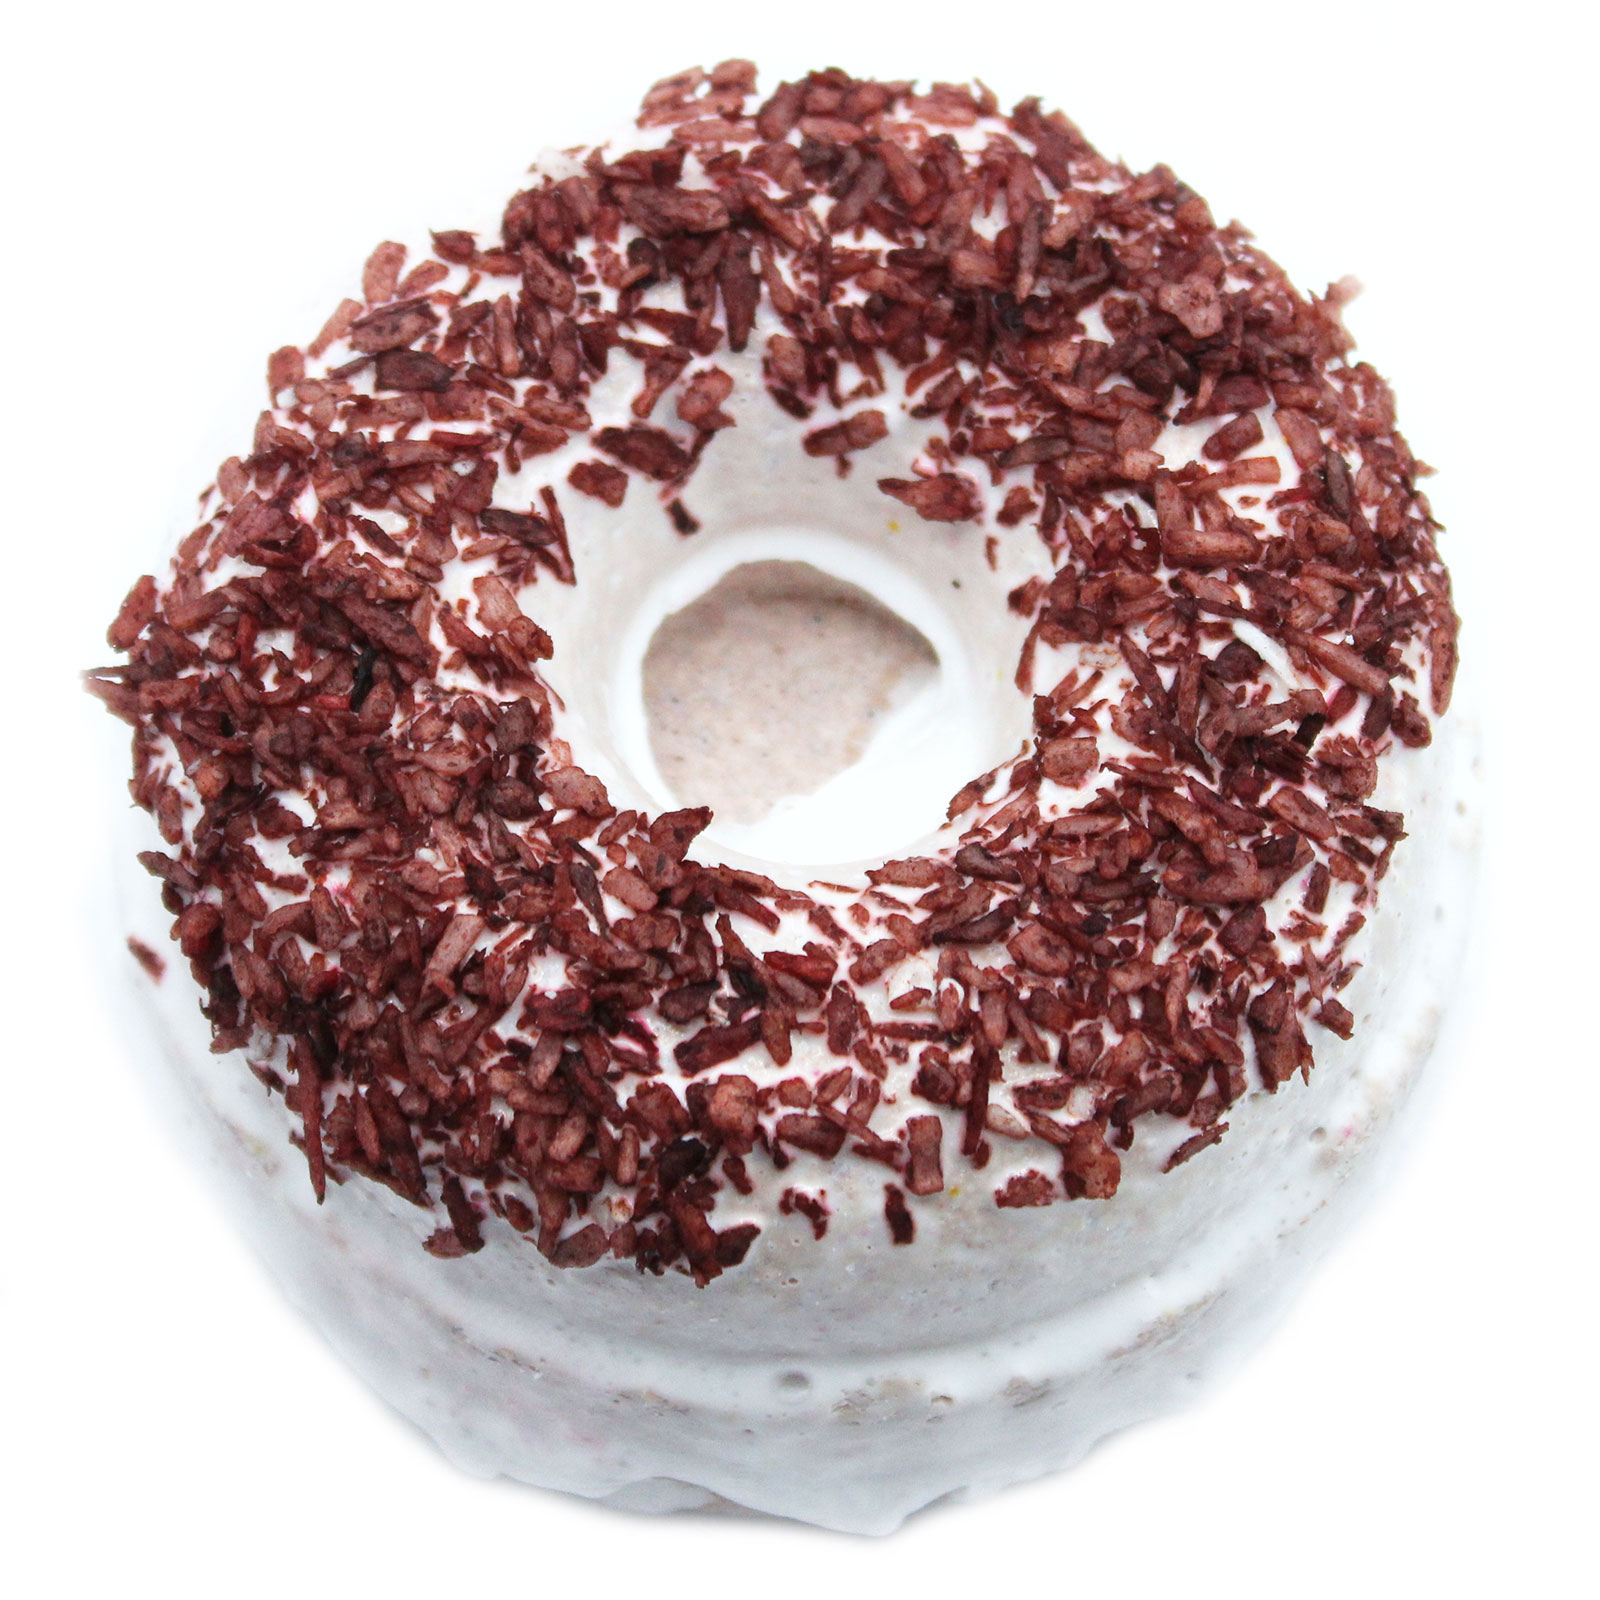 3 x Chocolate & Coconut Bath Donuts - Click Image to Close